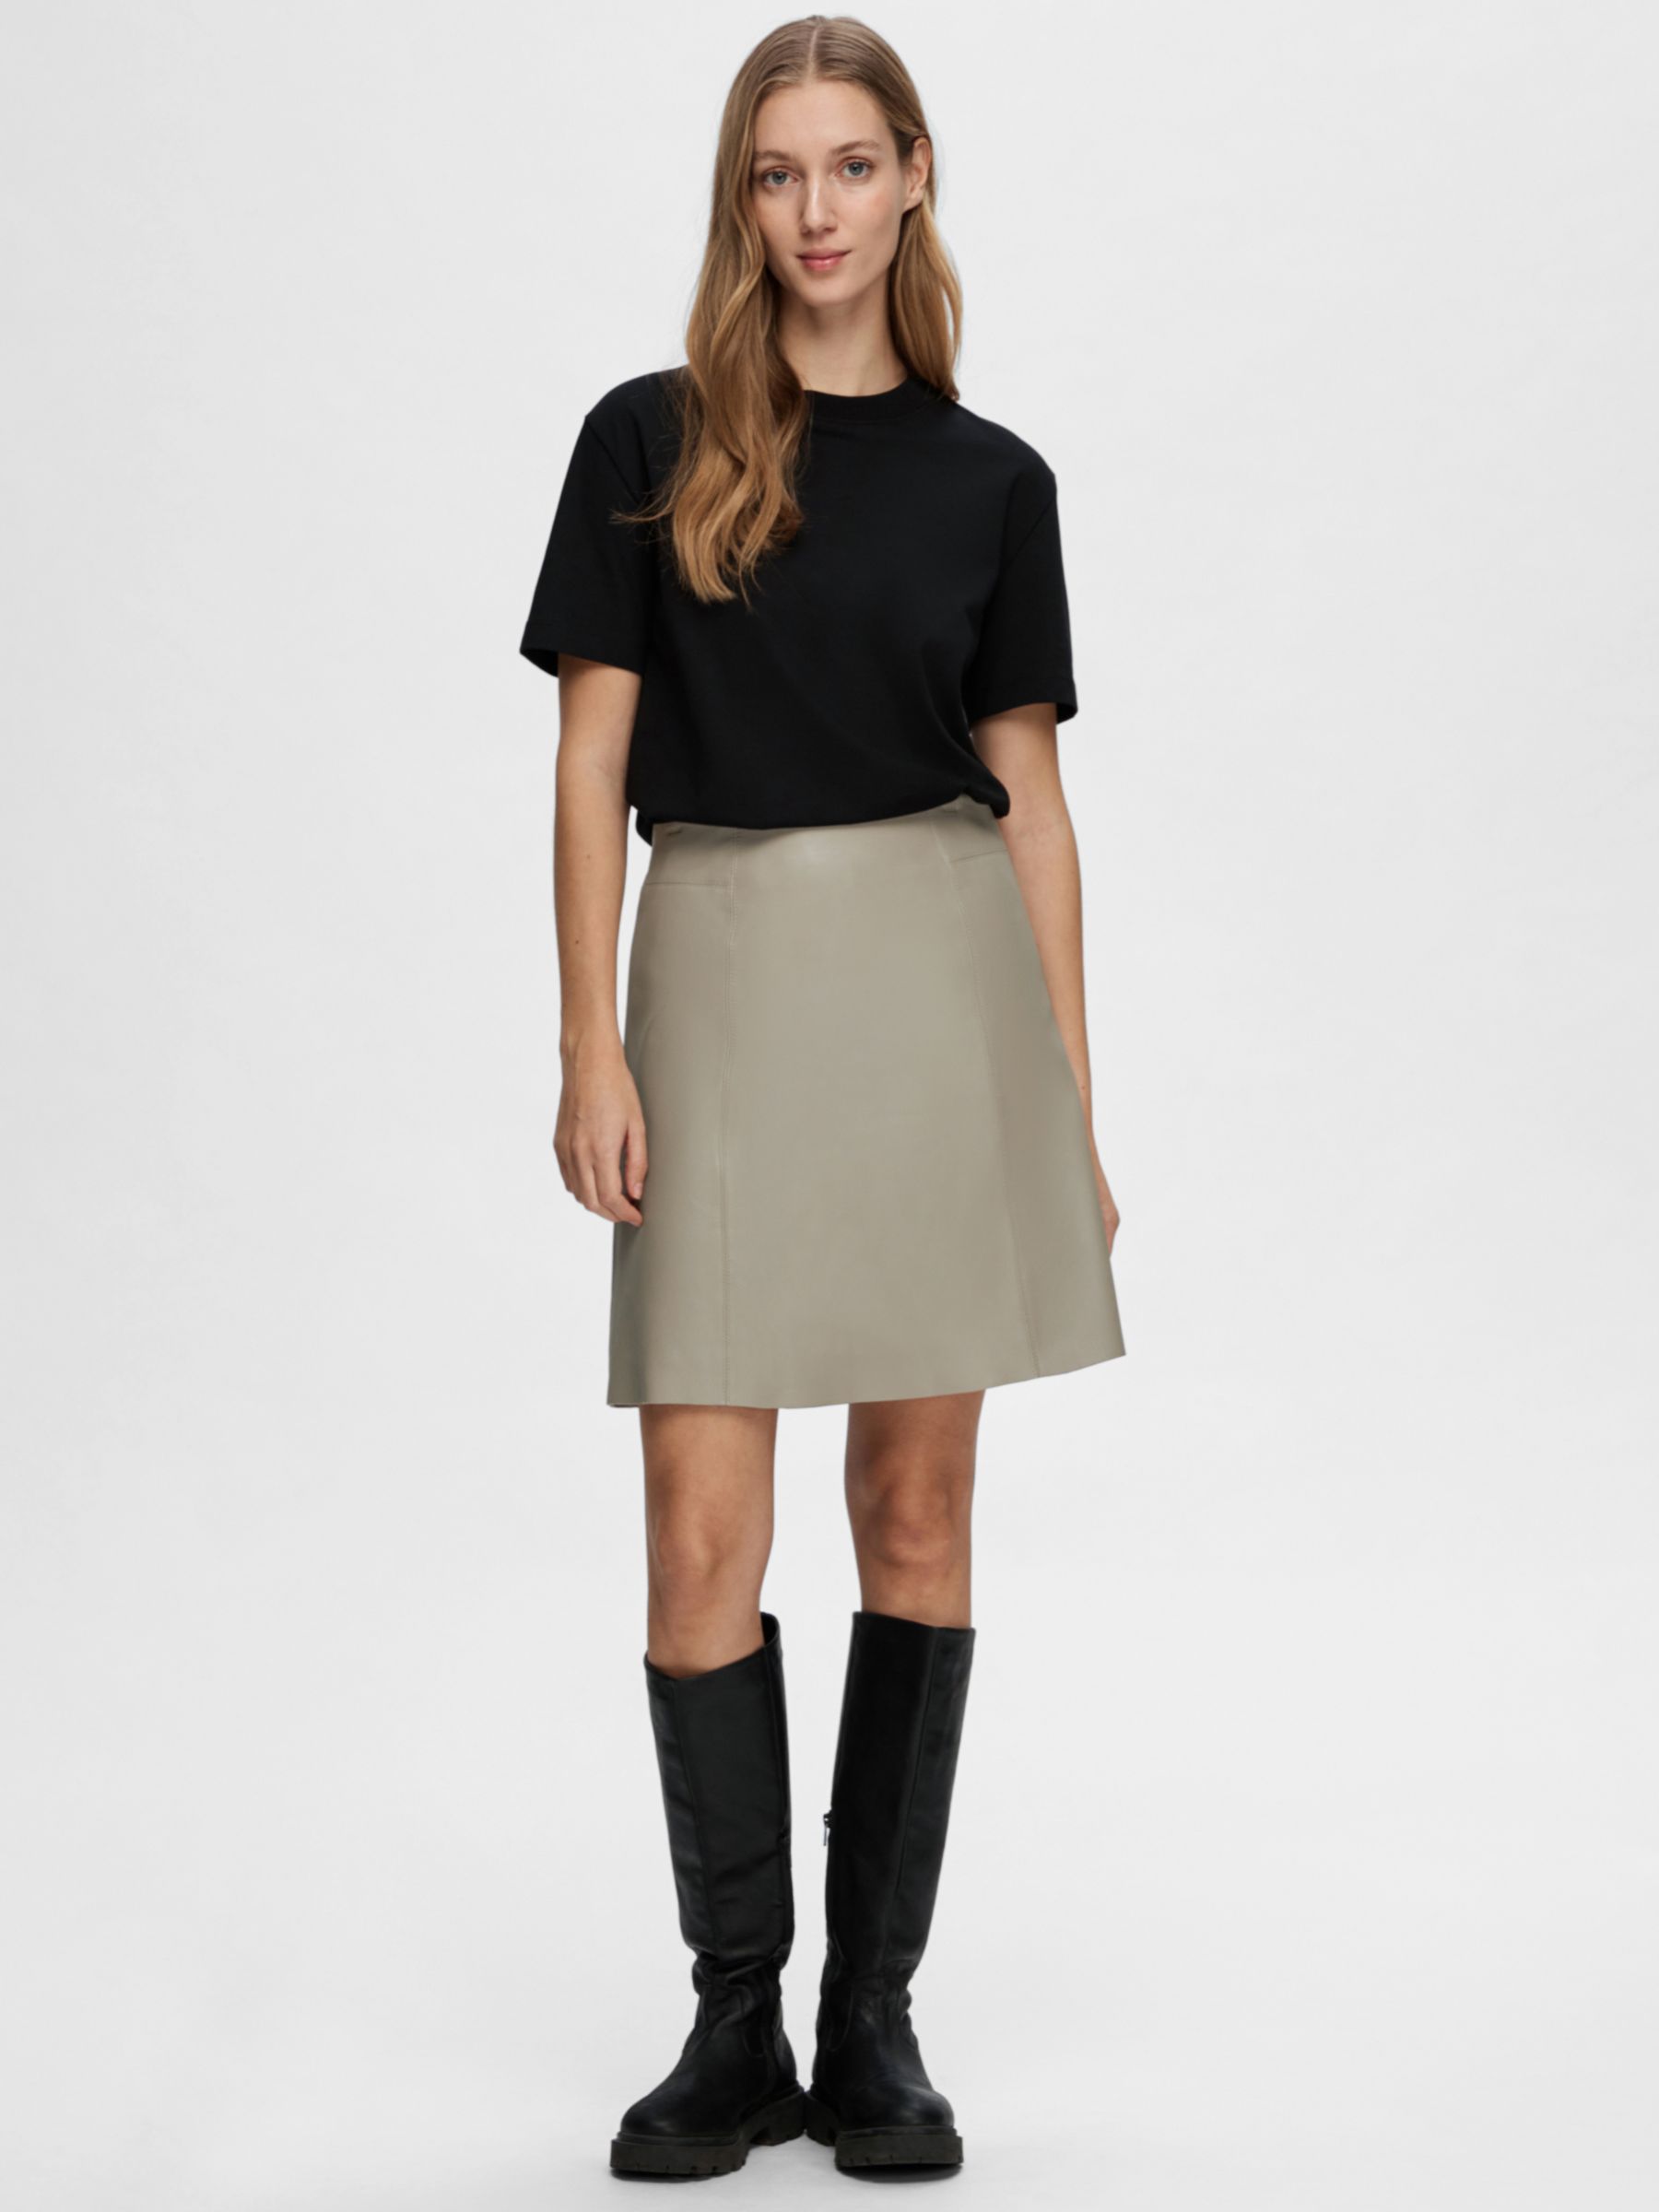 Buy SELECTED FEMME Leather Mini Skirt, Greige Online at johnlewis.com